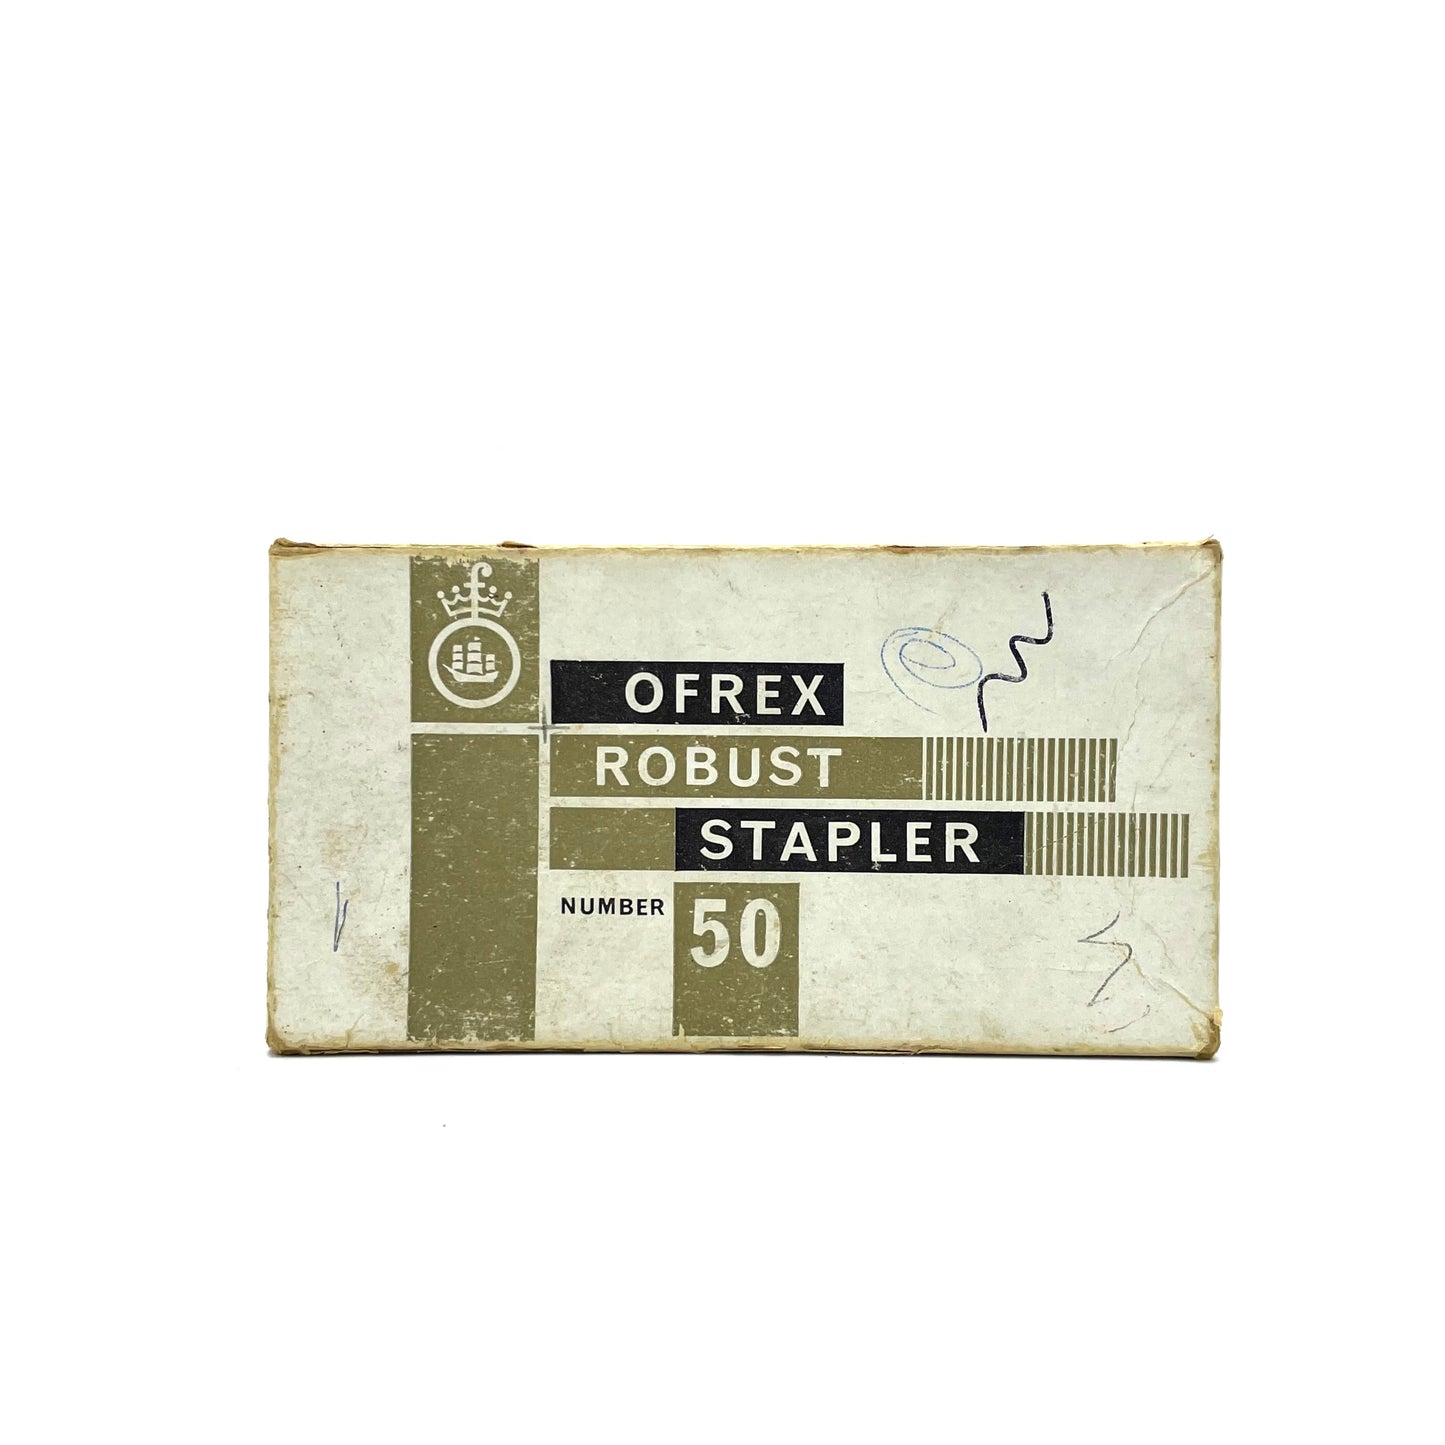 MCM Ofrex Stapler in Original Box - 16cm